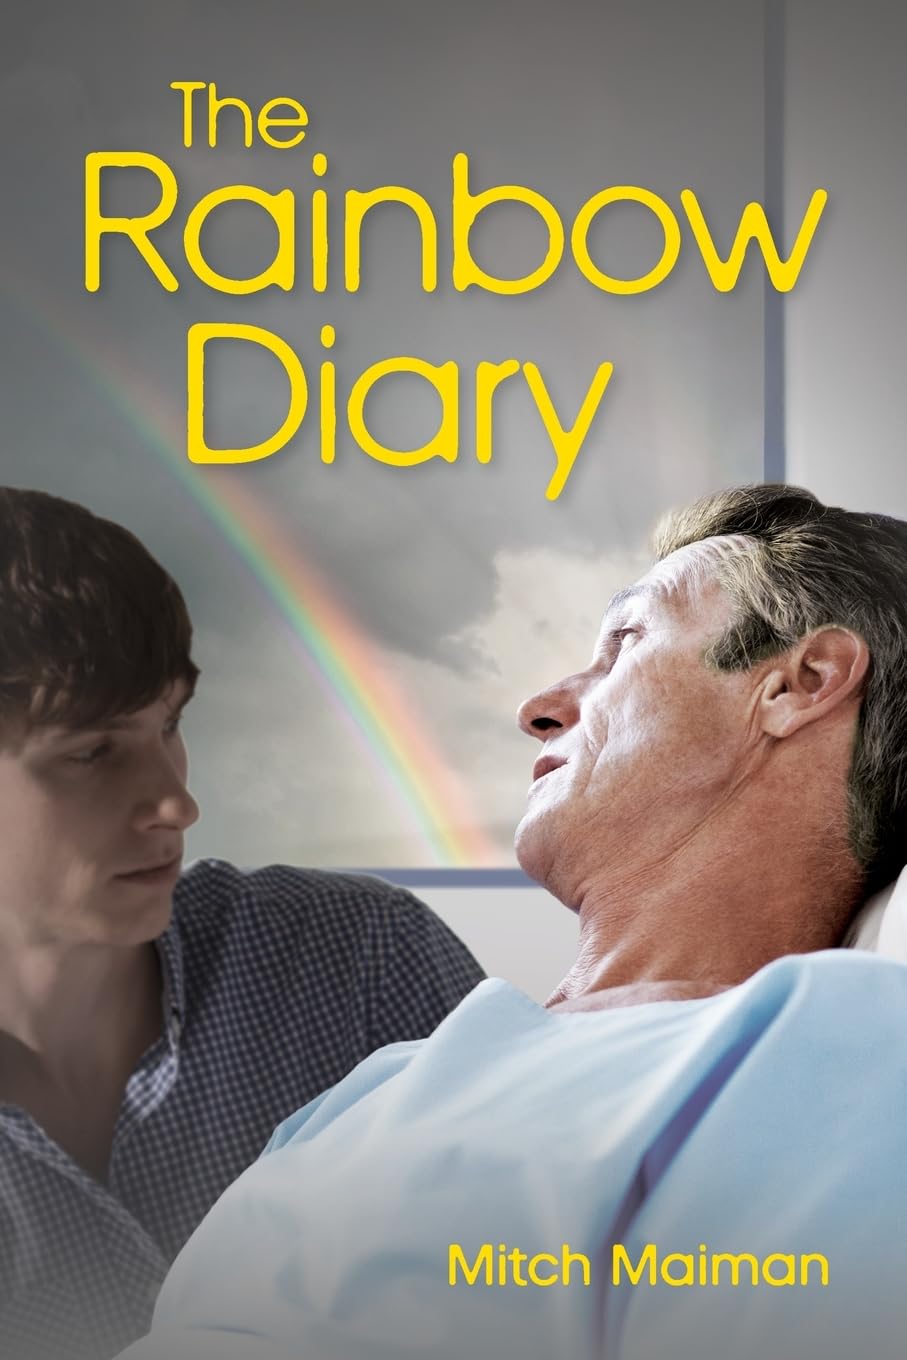 The Rainbow Diary by Mitch Maiman